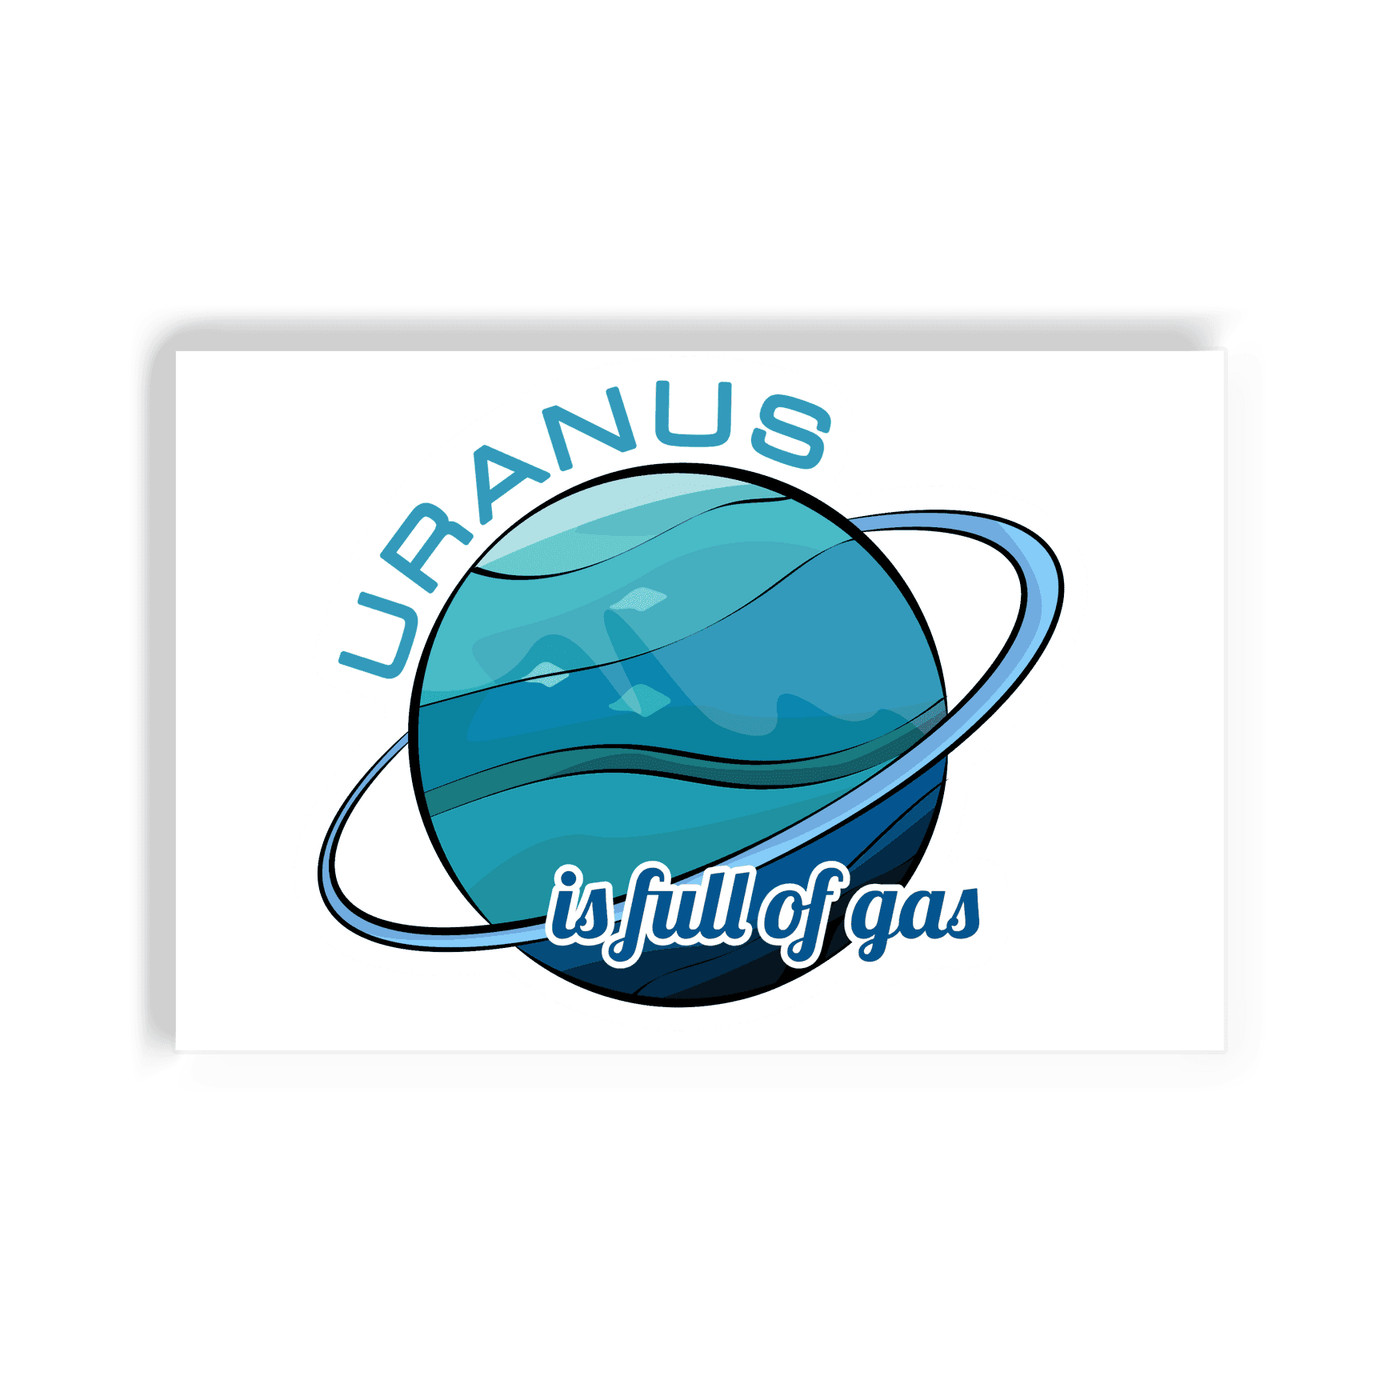 Uranus is Full of Gas - 2x3 Magnet